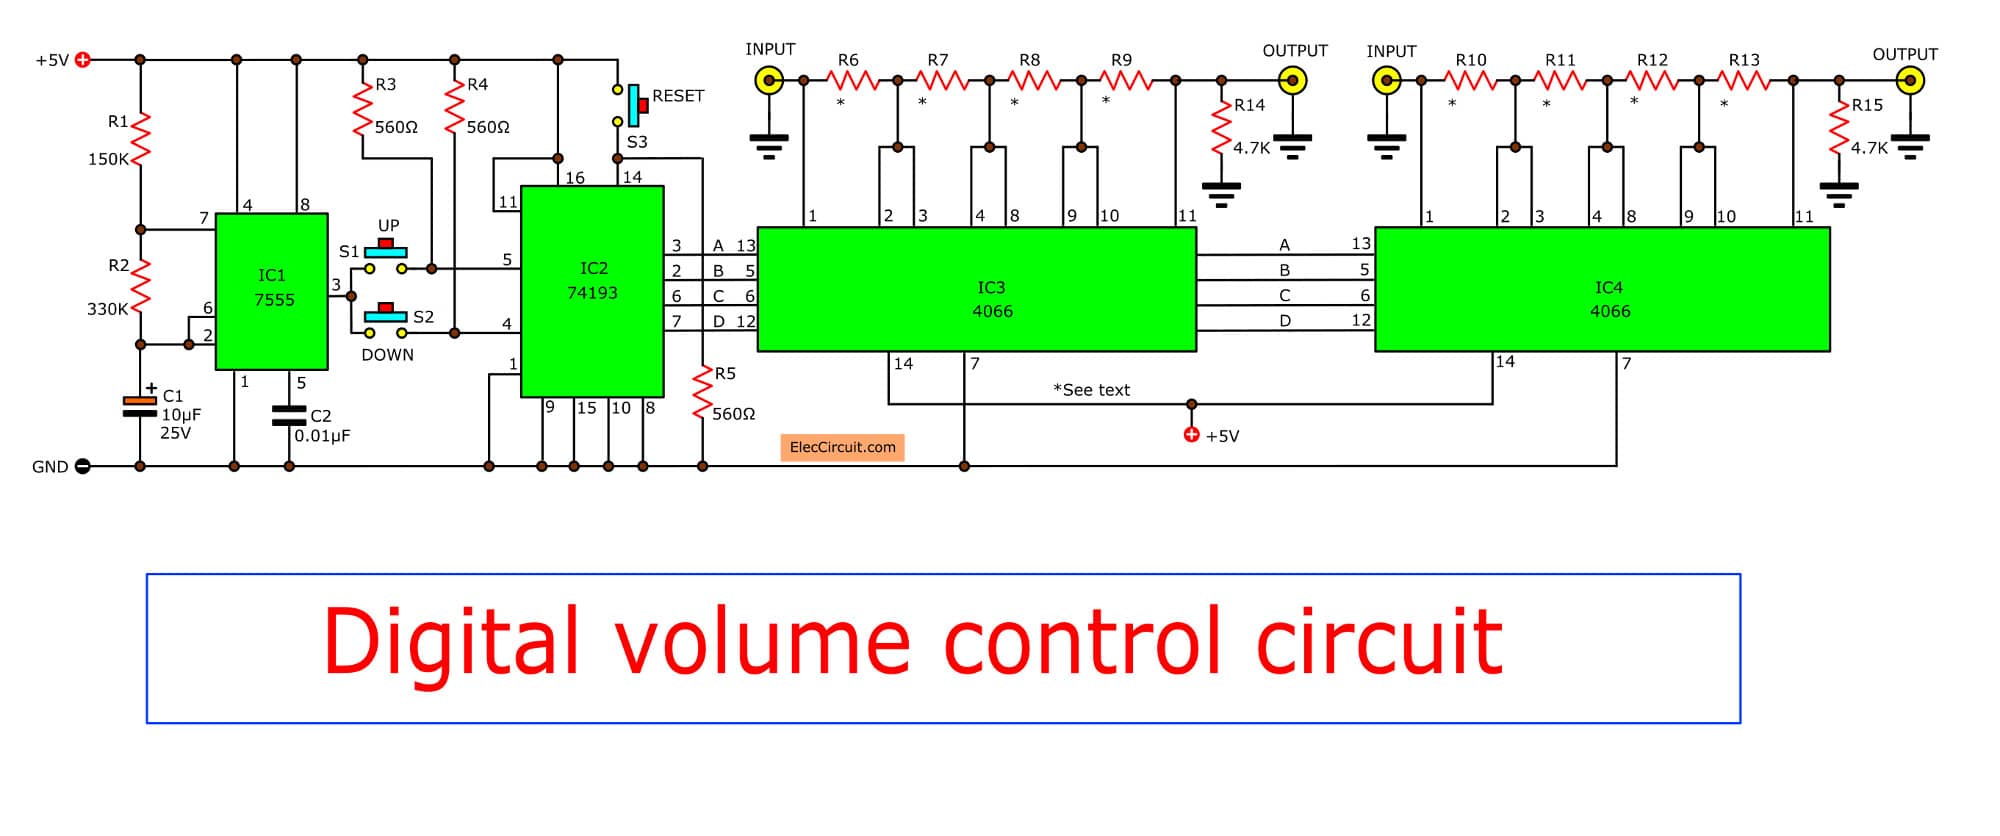 digital volume control circuit